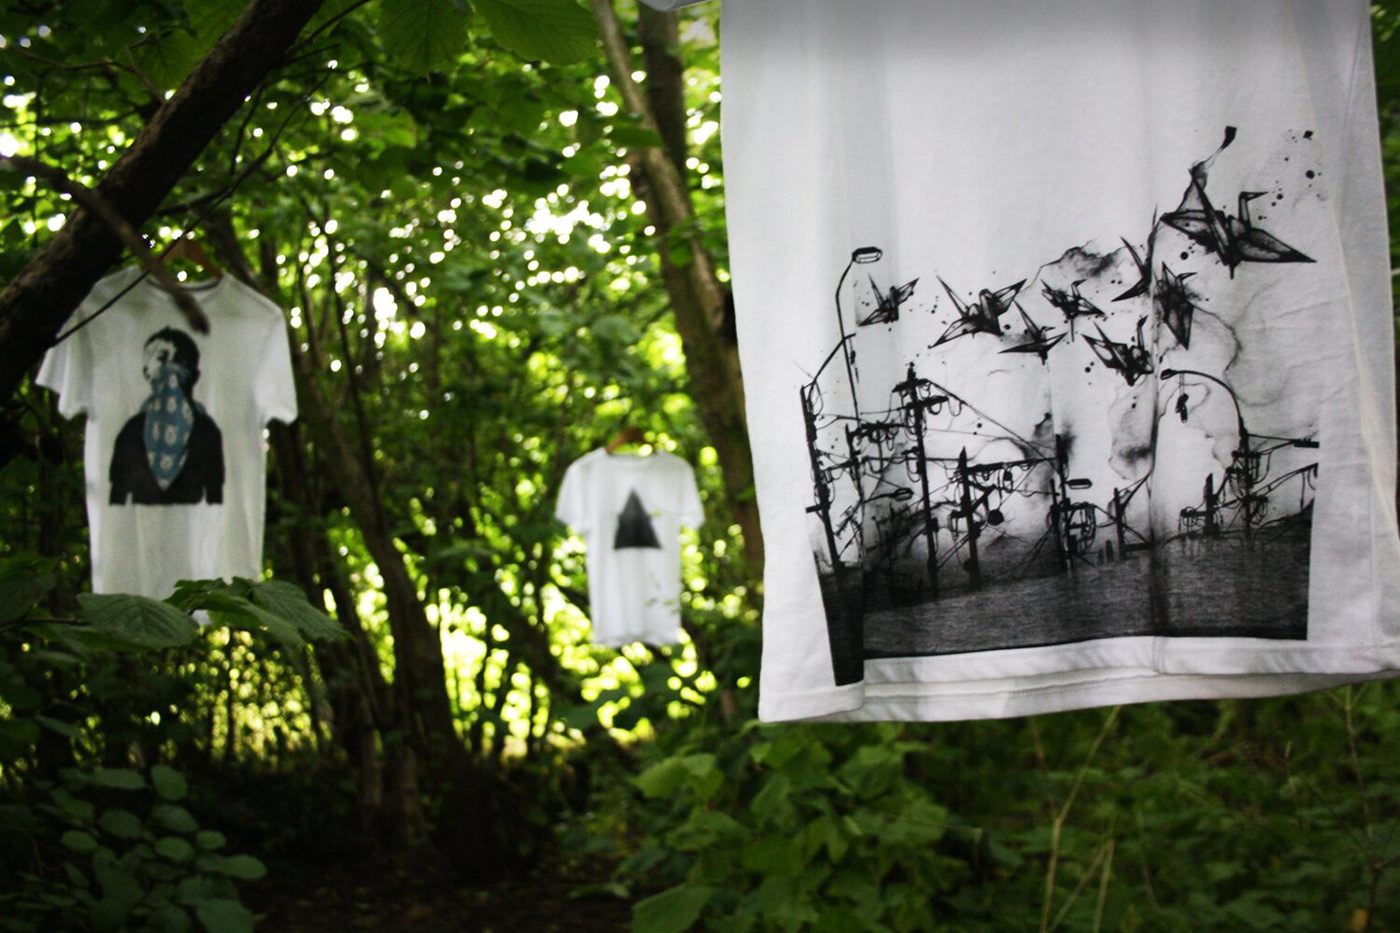 tshirt Illustrator Nanami Cowdroy screen print silk screen print Clothing Label designs textile summer dolk T Shirt